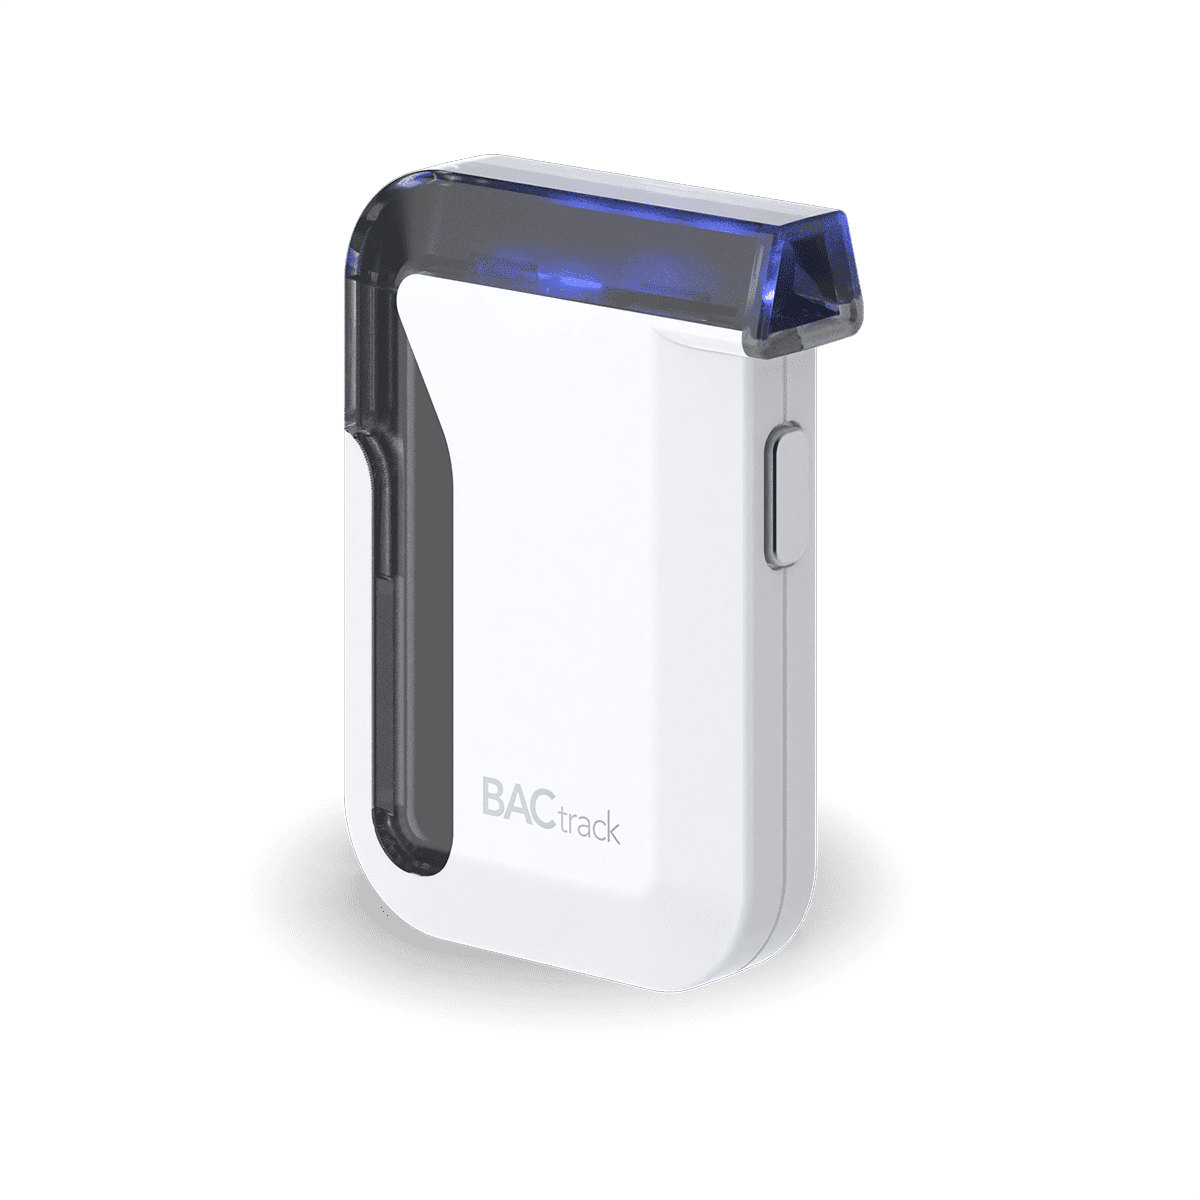 Breathometer personal breathalyzer review: iPhone breathalyzer fun